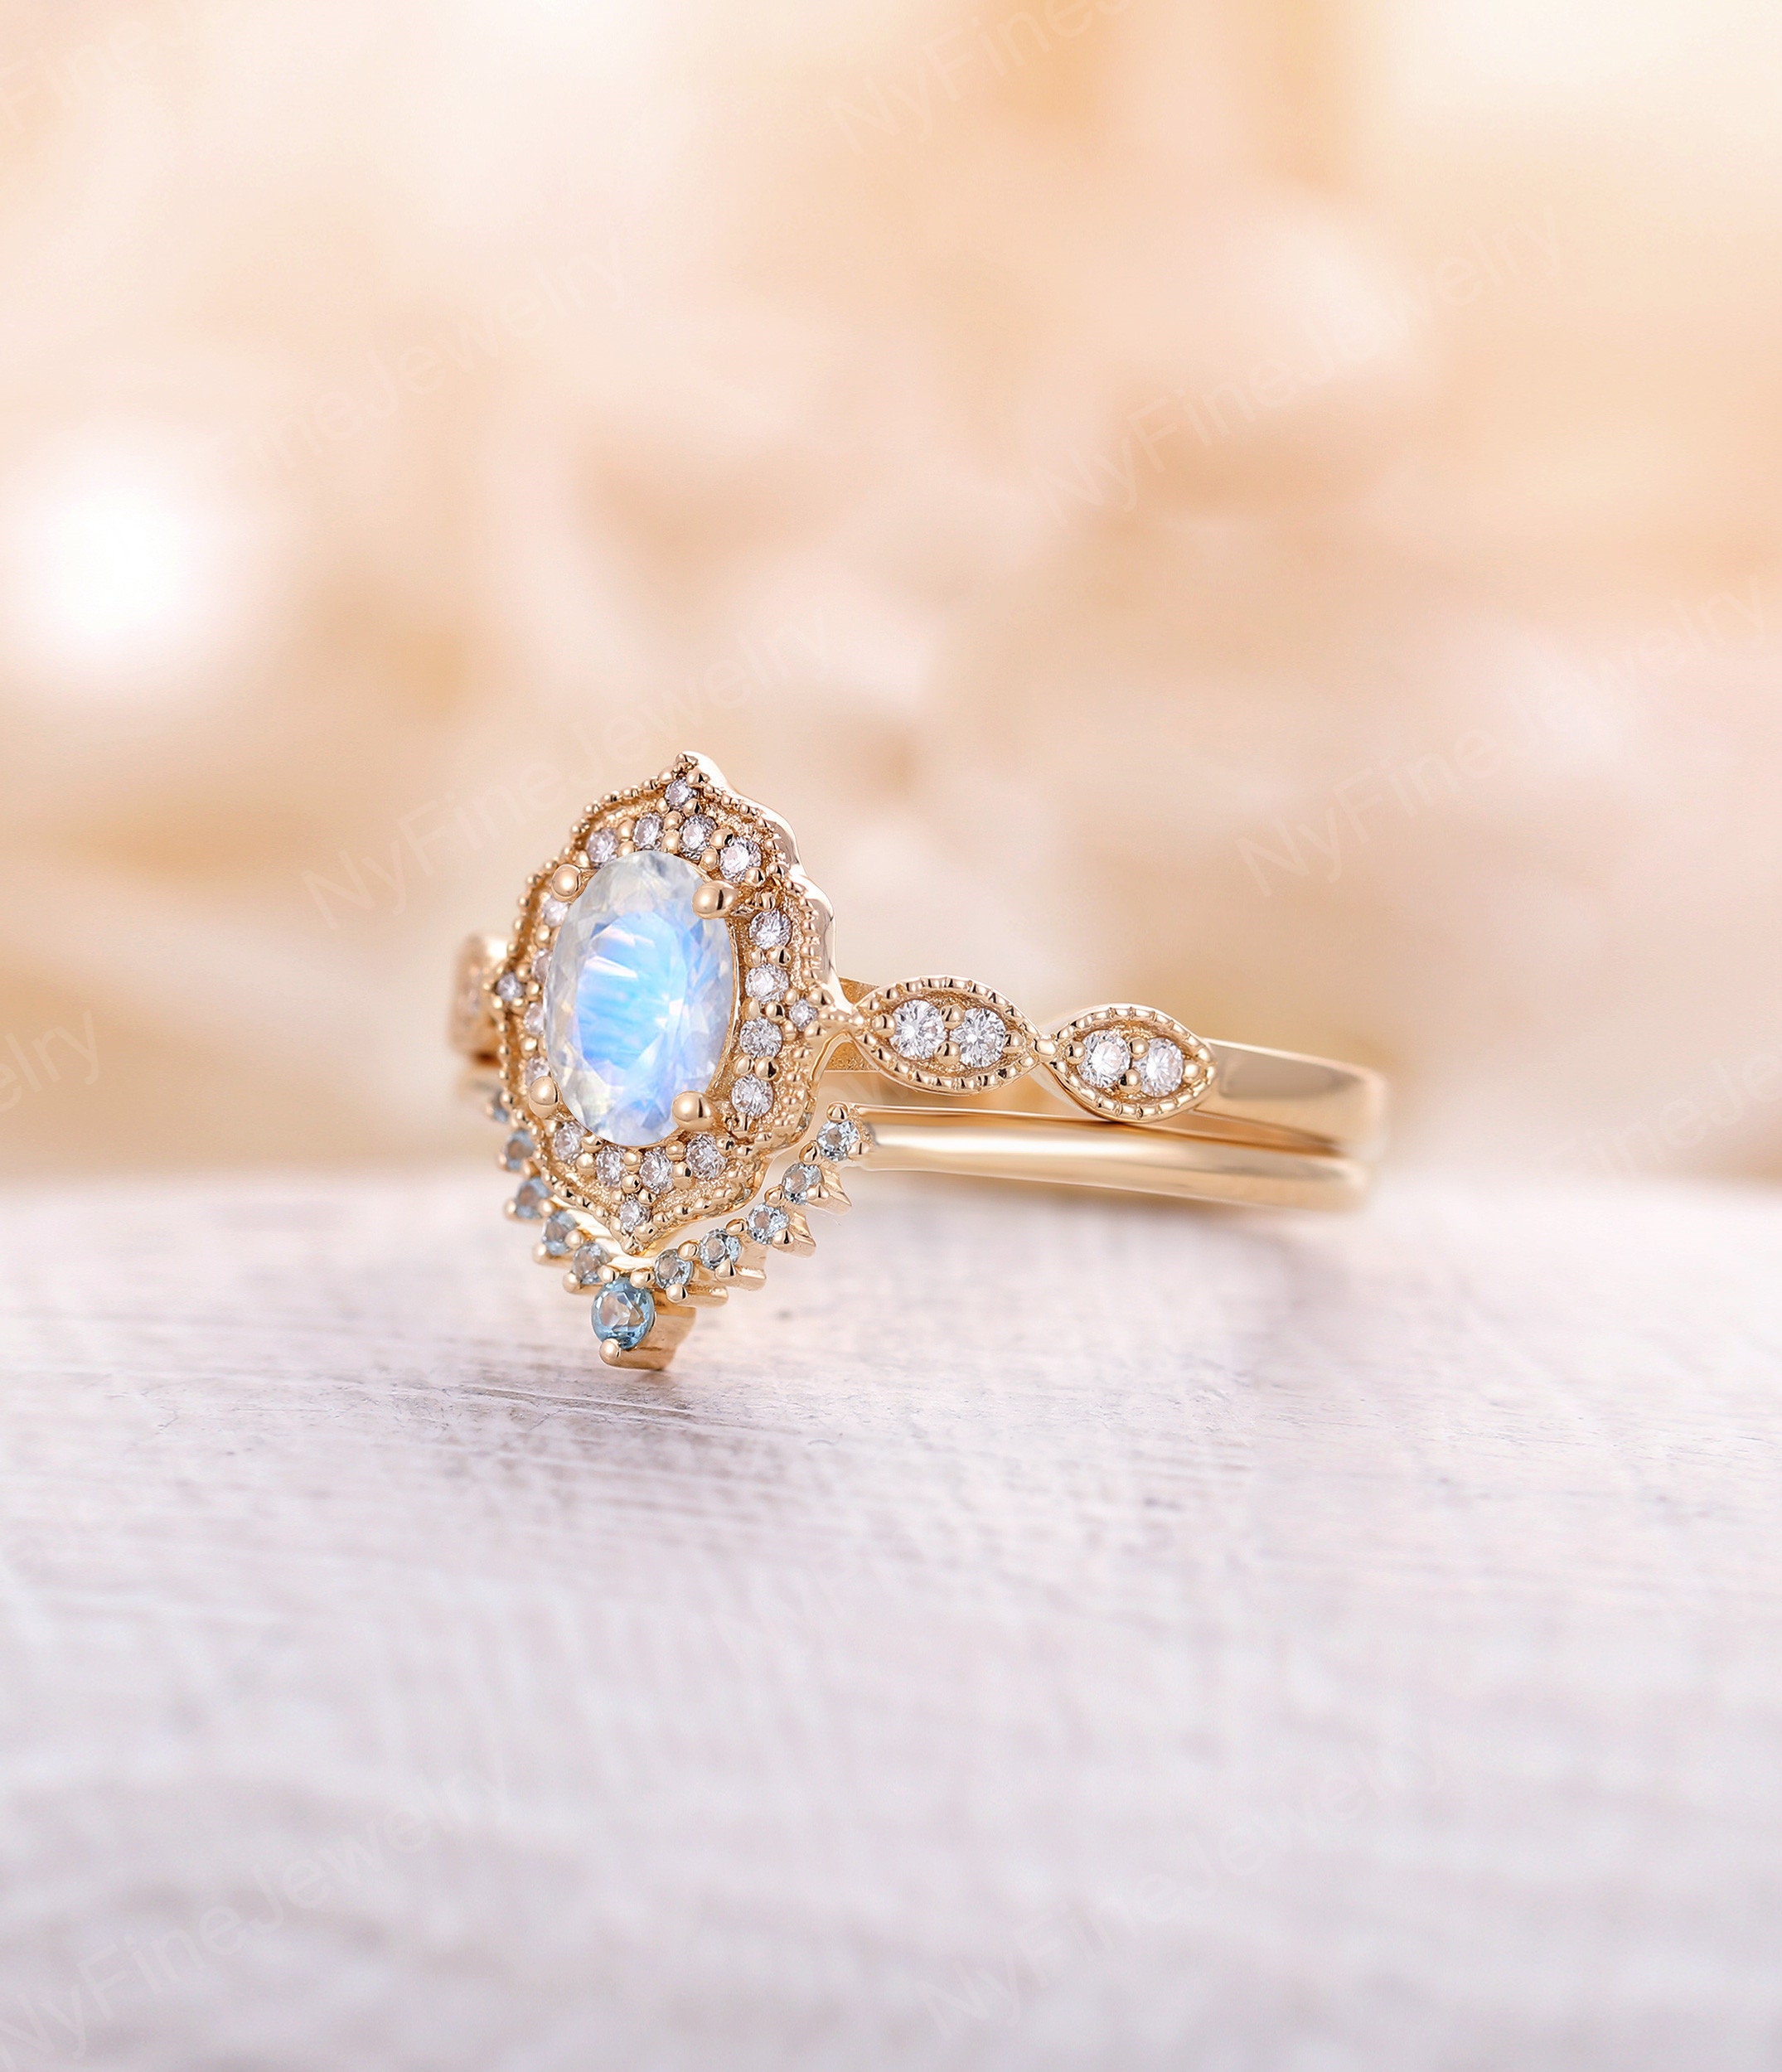 Moonstone engagement ring oval cut vintage diamond rings | Etsy